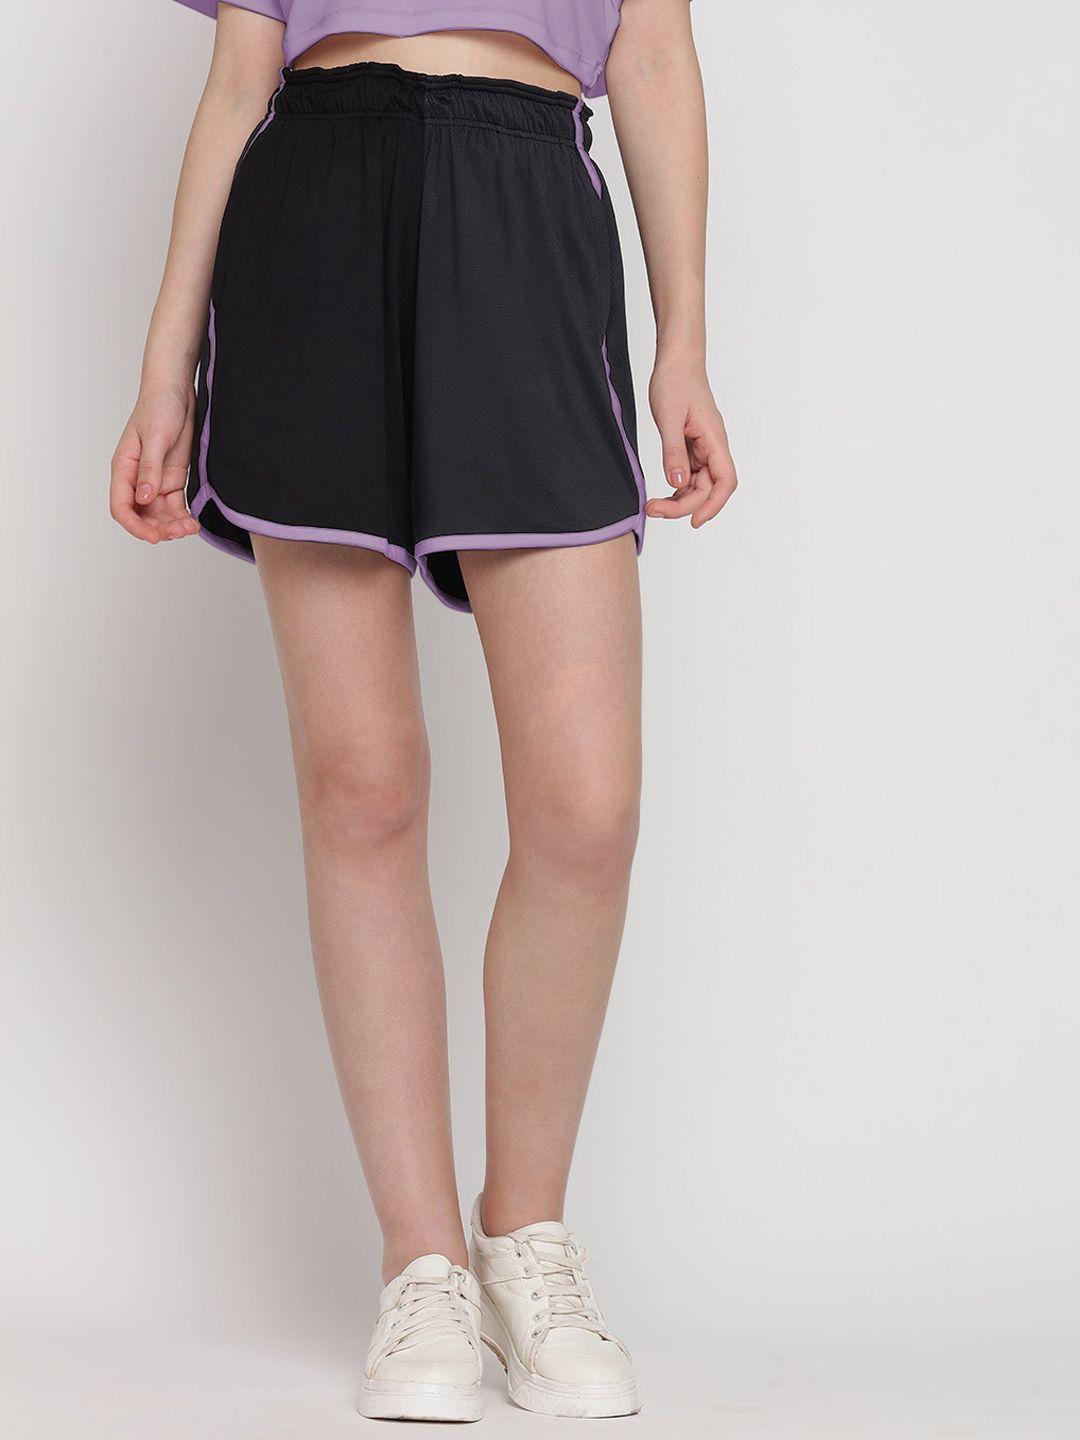 wearjukebox-women-high-rise-running-shorts